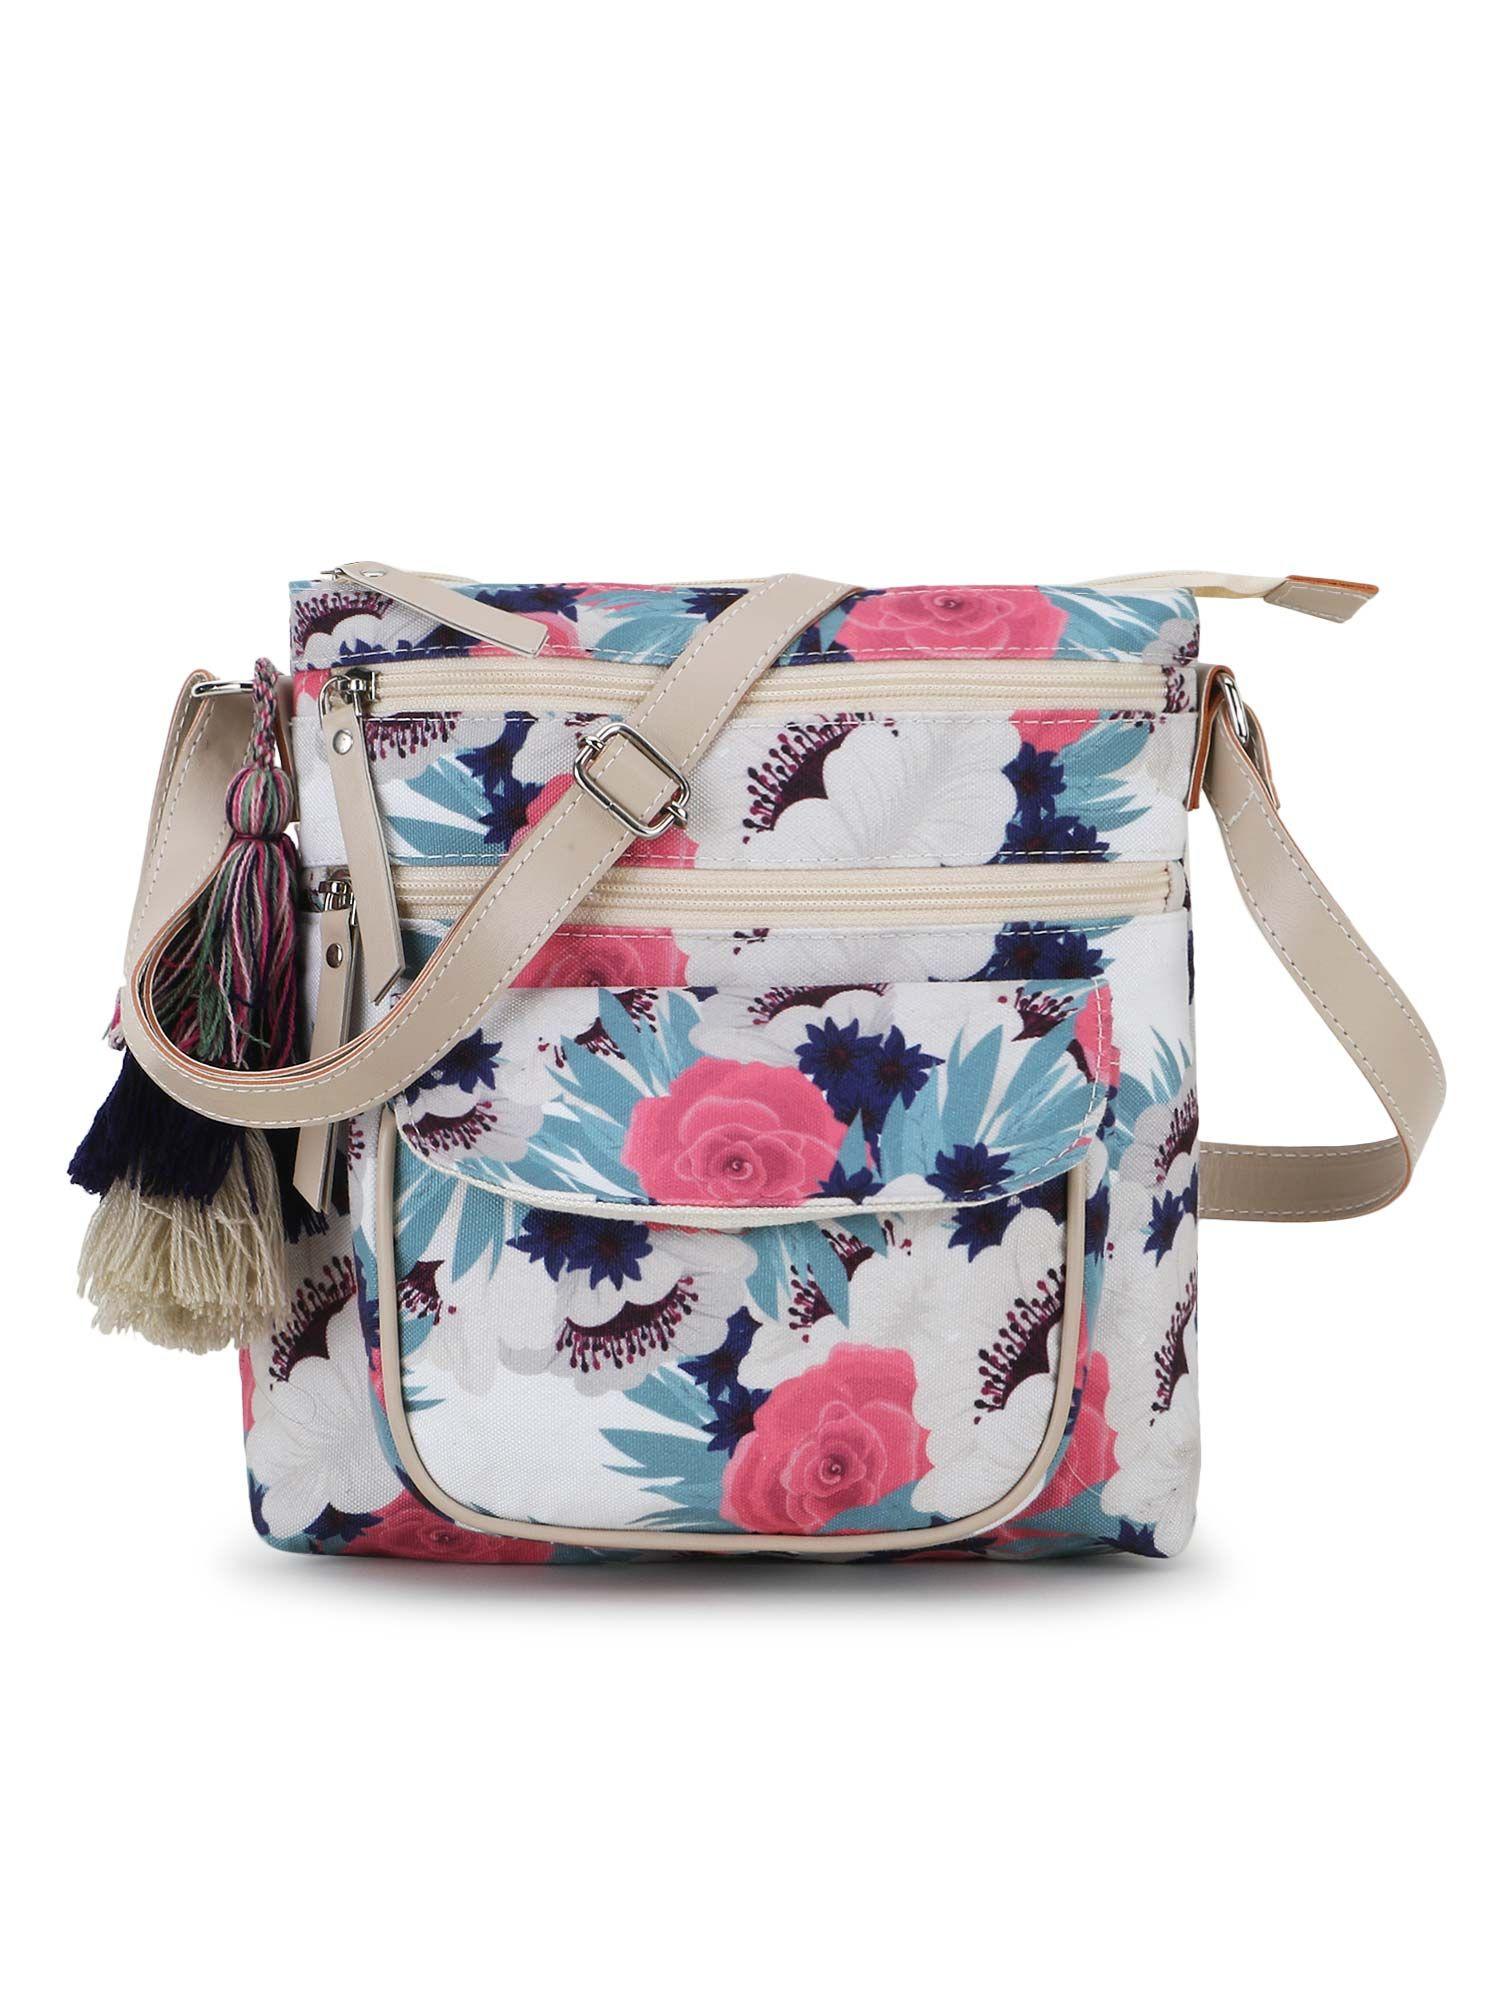 rangoli cream & multi polycotton & canvas floral digital printed sling bag